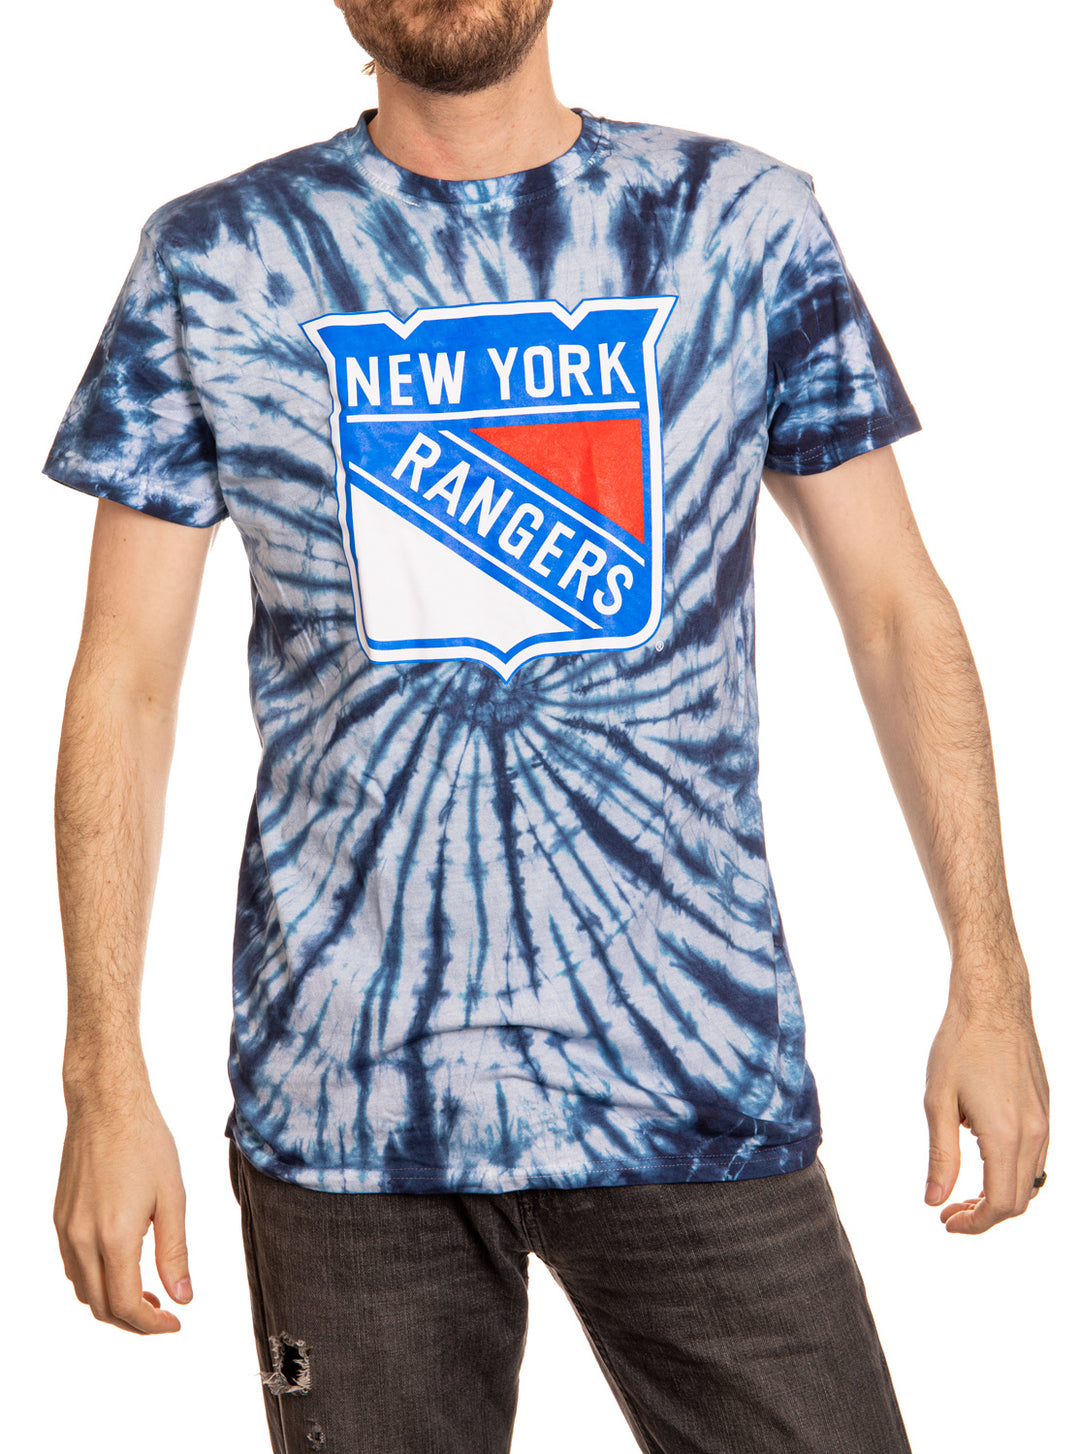 New York Rangers Tomorrow shirt - Teeclover